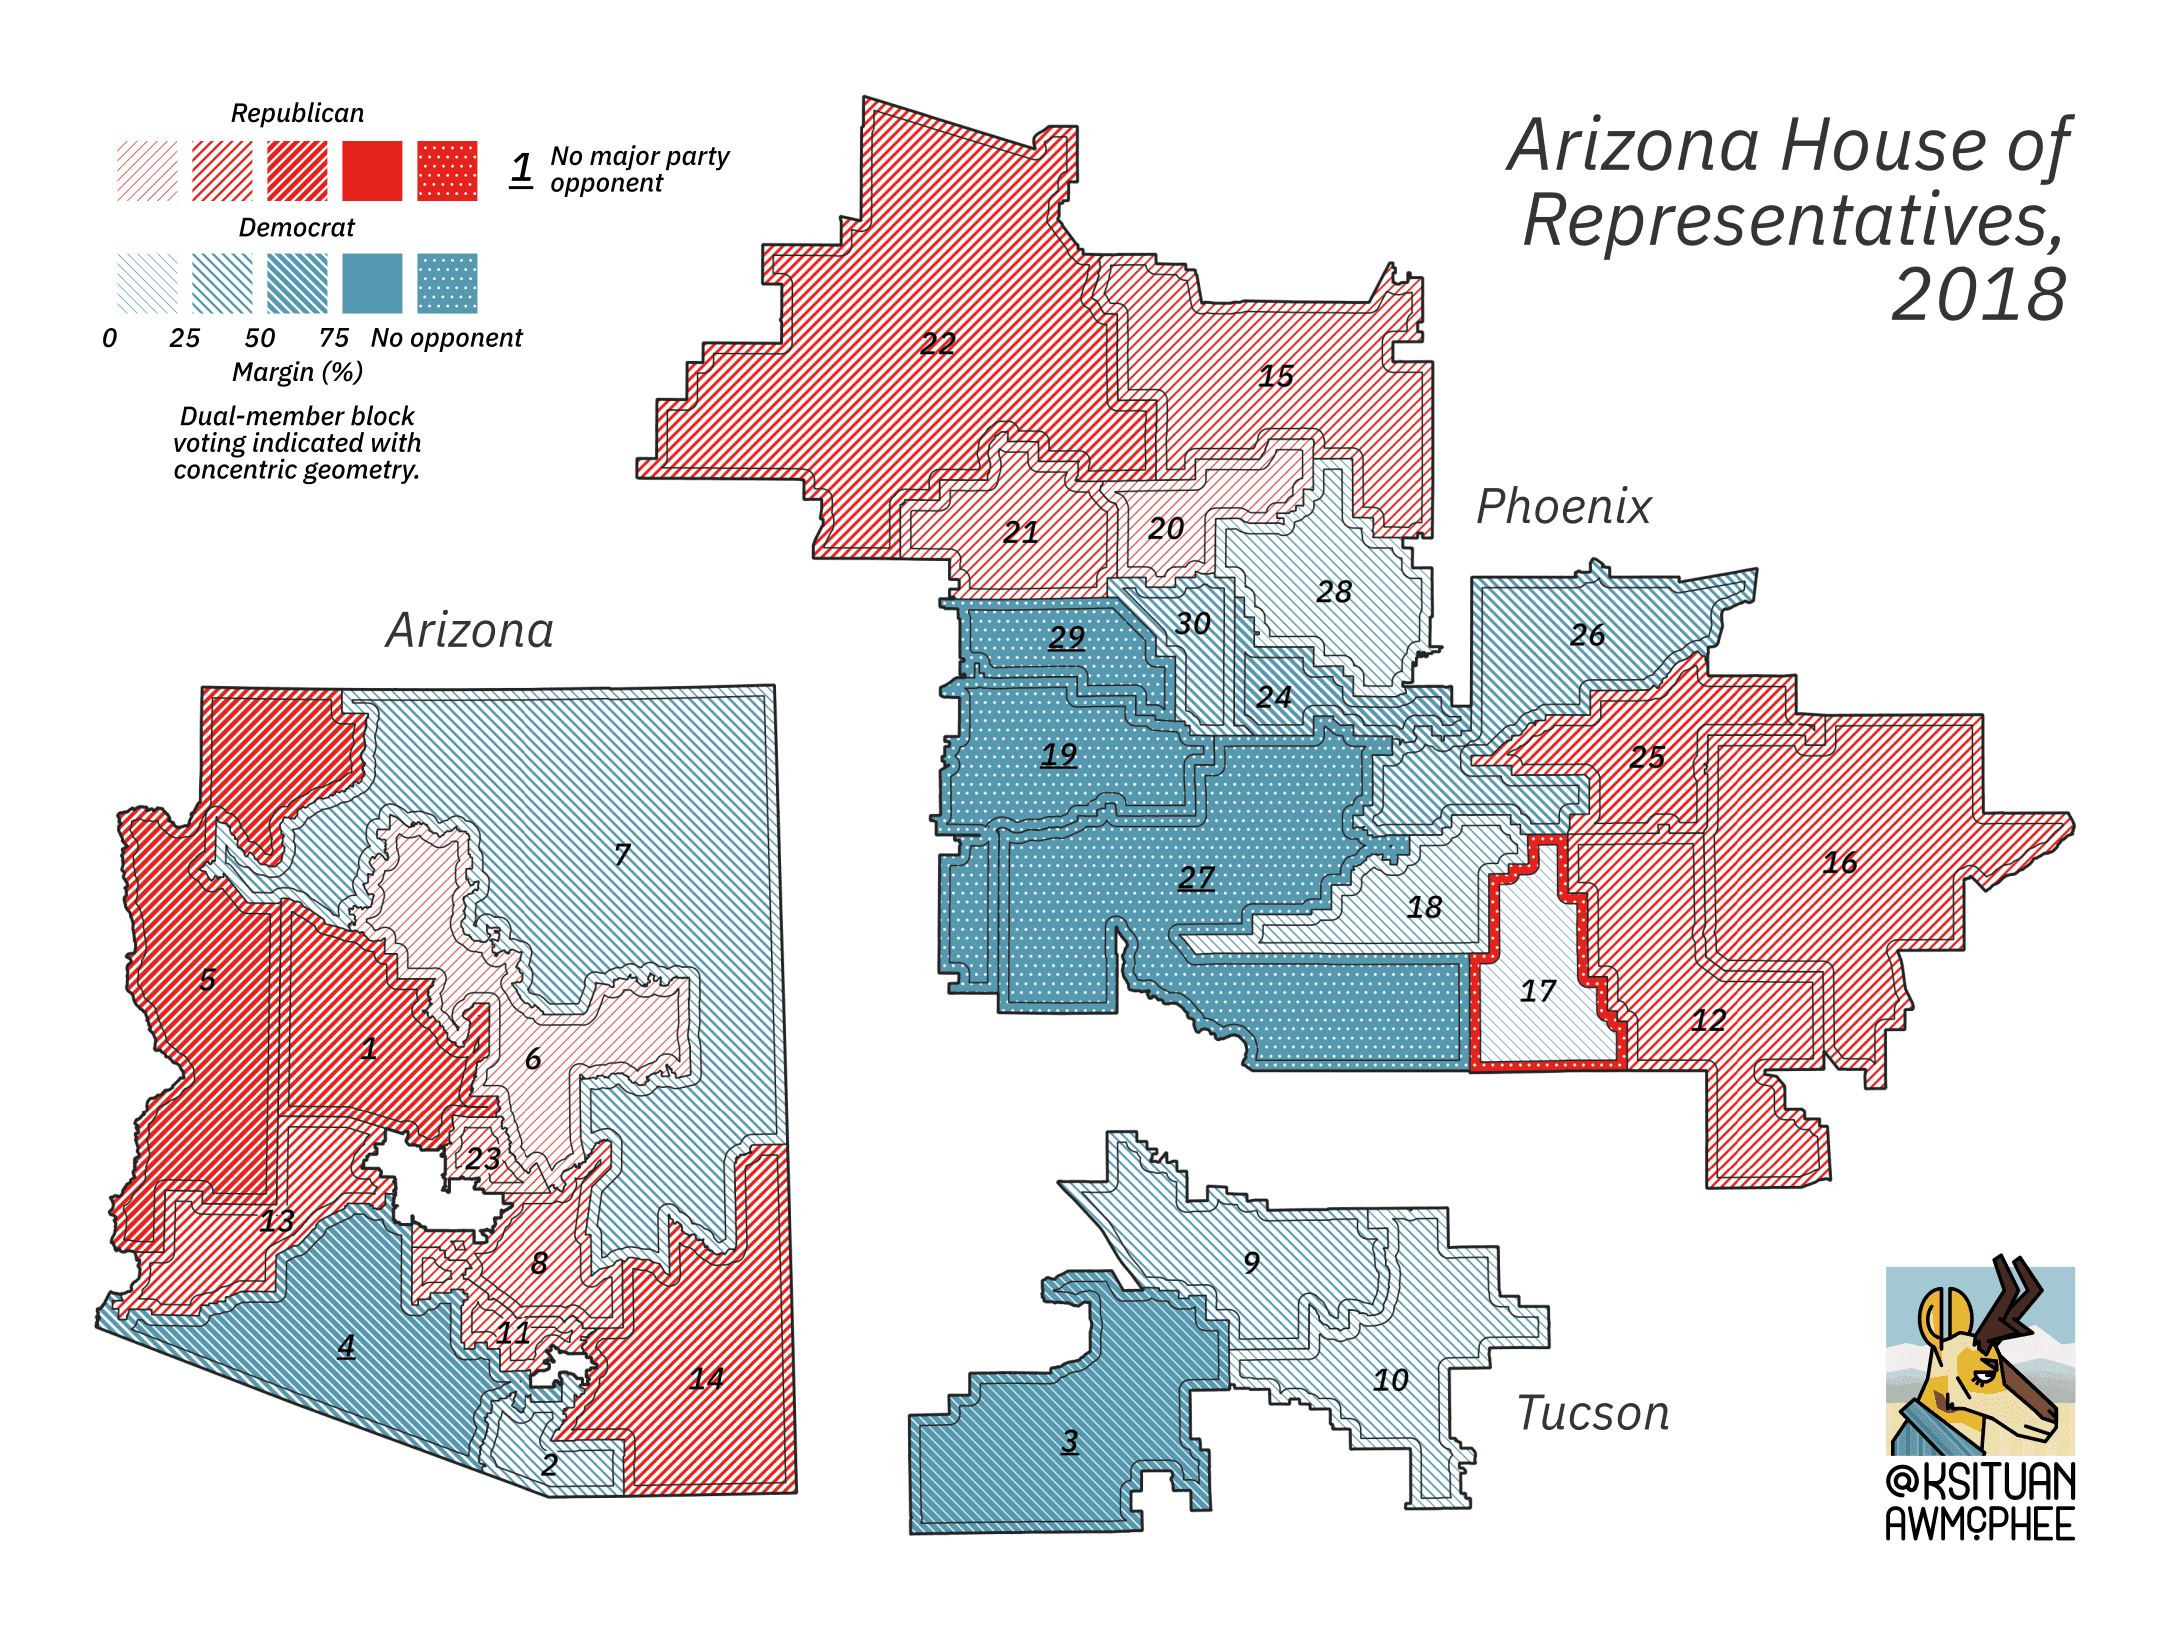 A political map of Arizona.